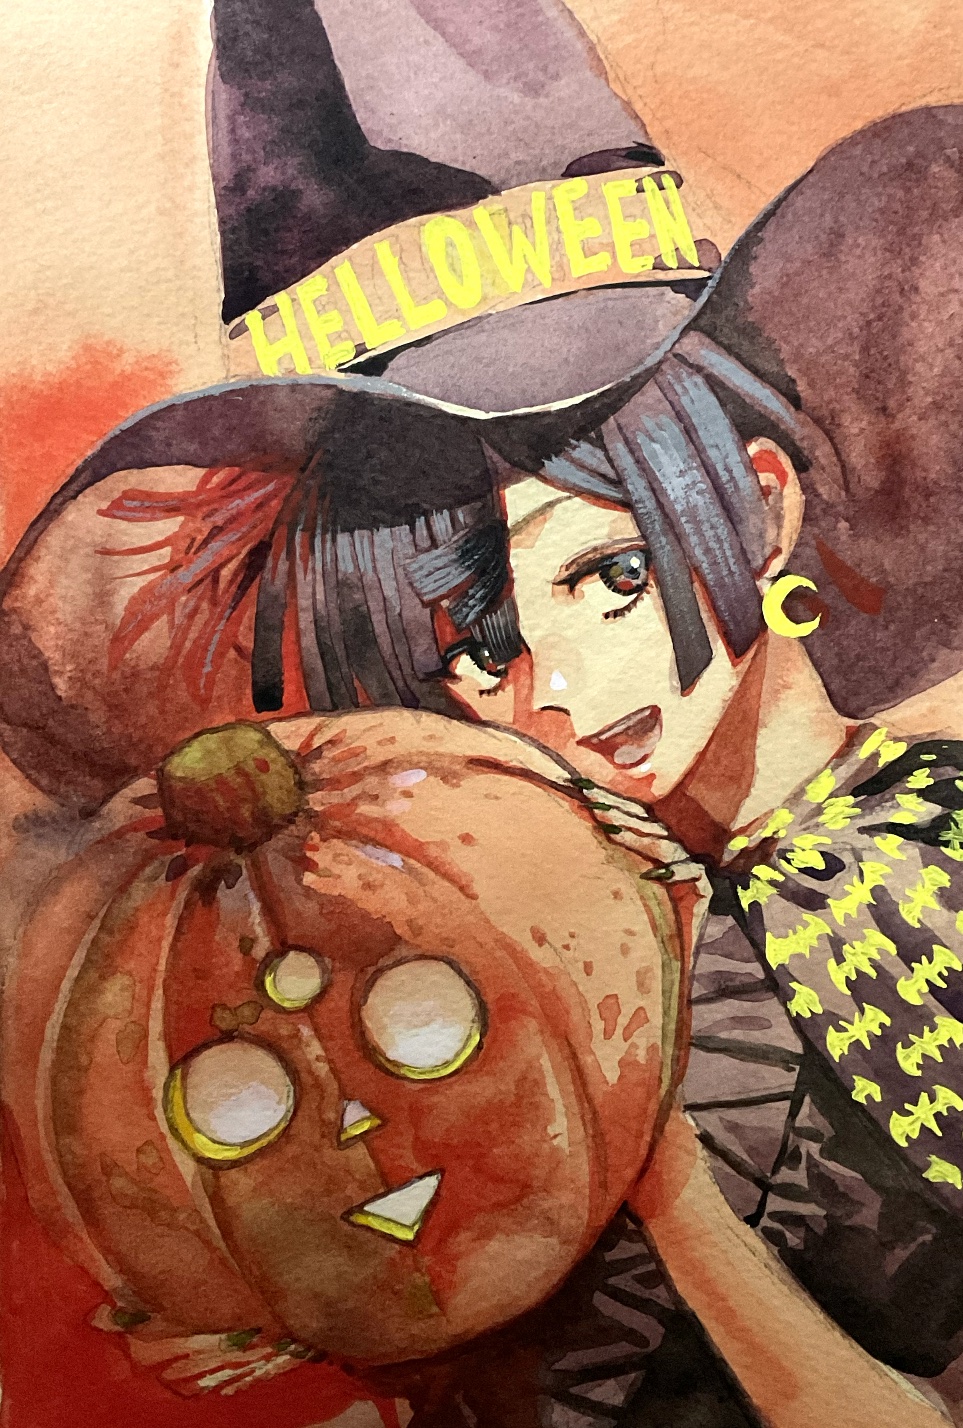 insert image of new halloween image by yuji kaku